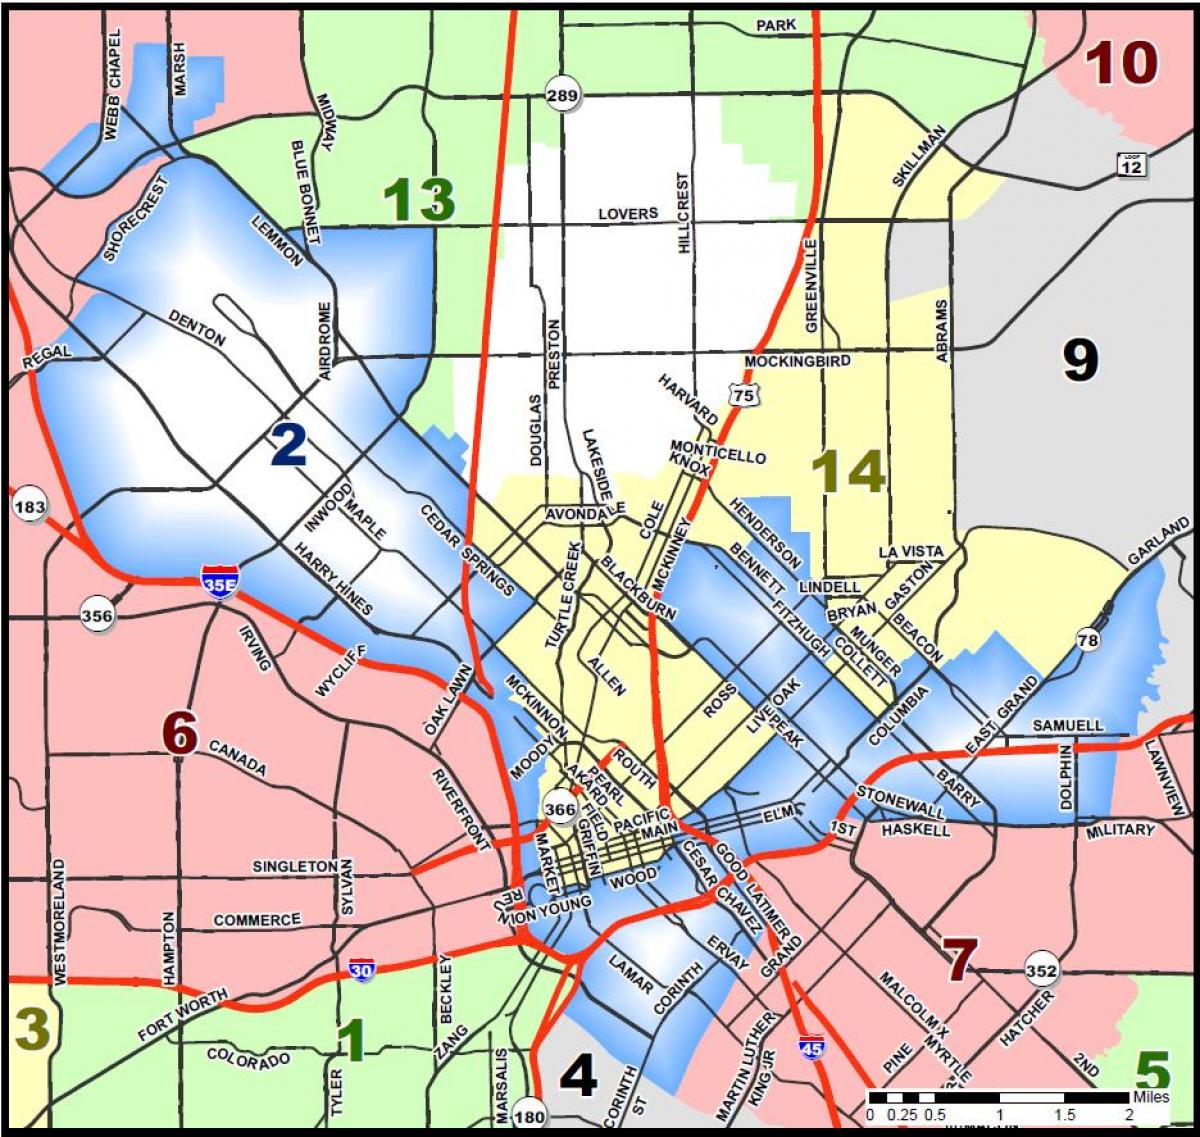 Dallas udalak auzoan mapa